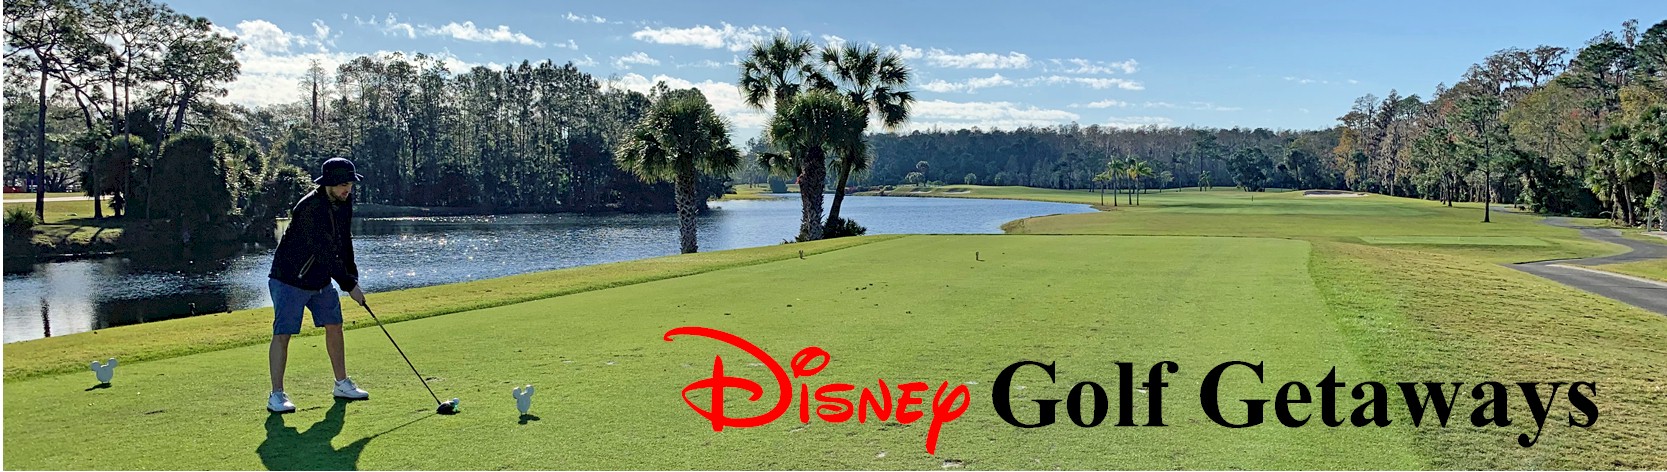 Disney Golf Getaways from Academy Travel